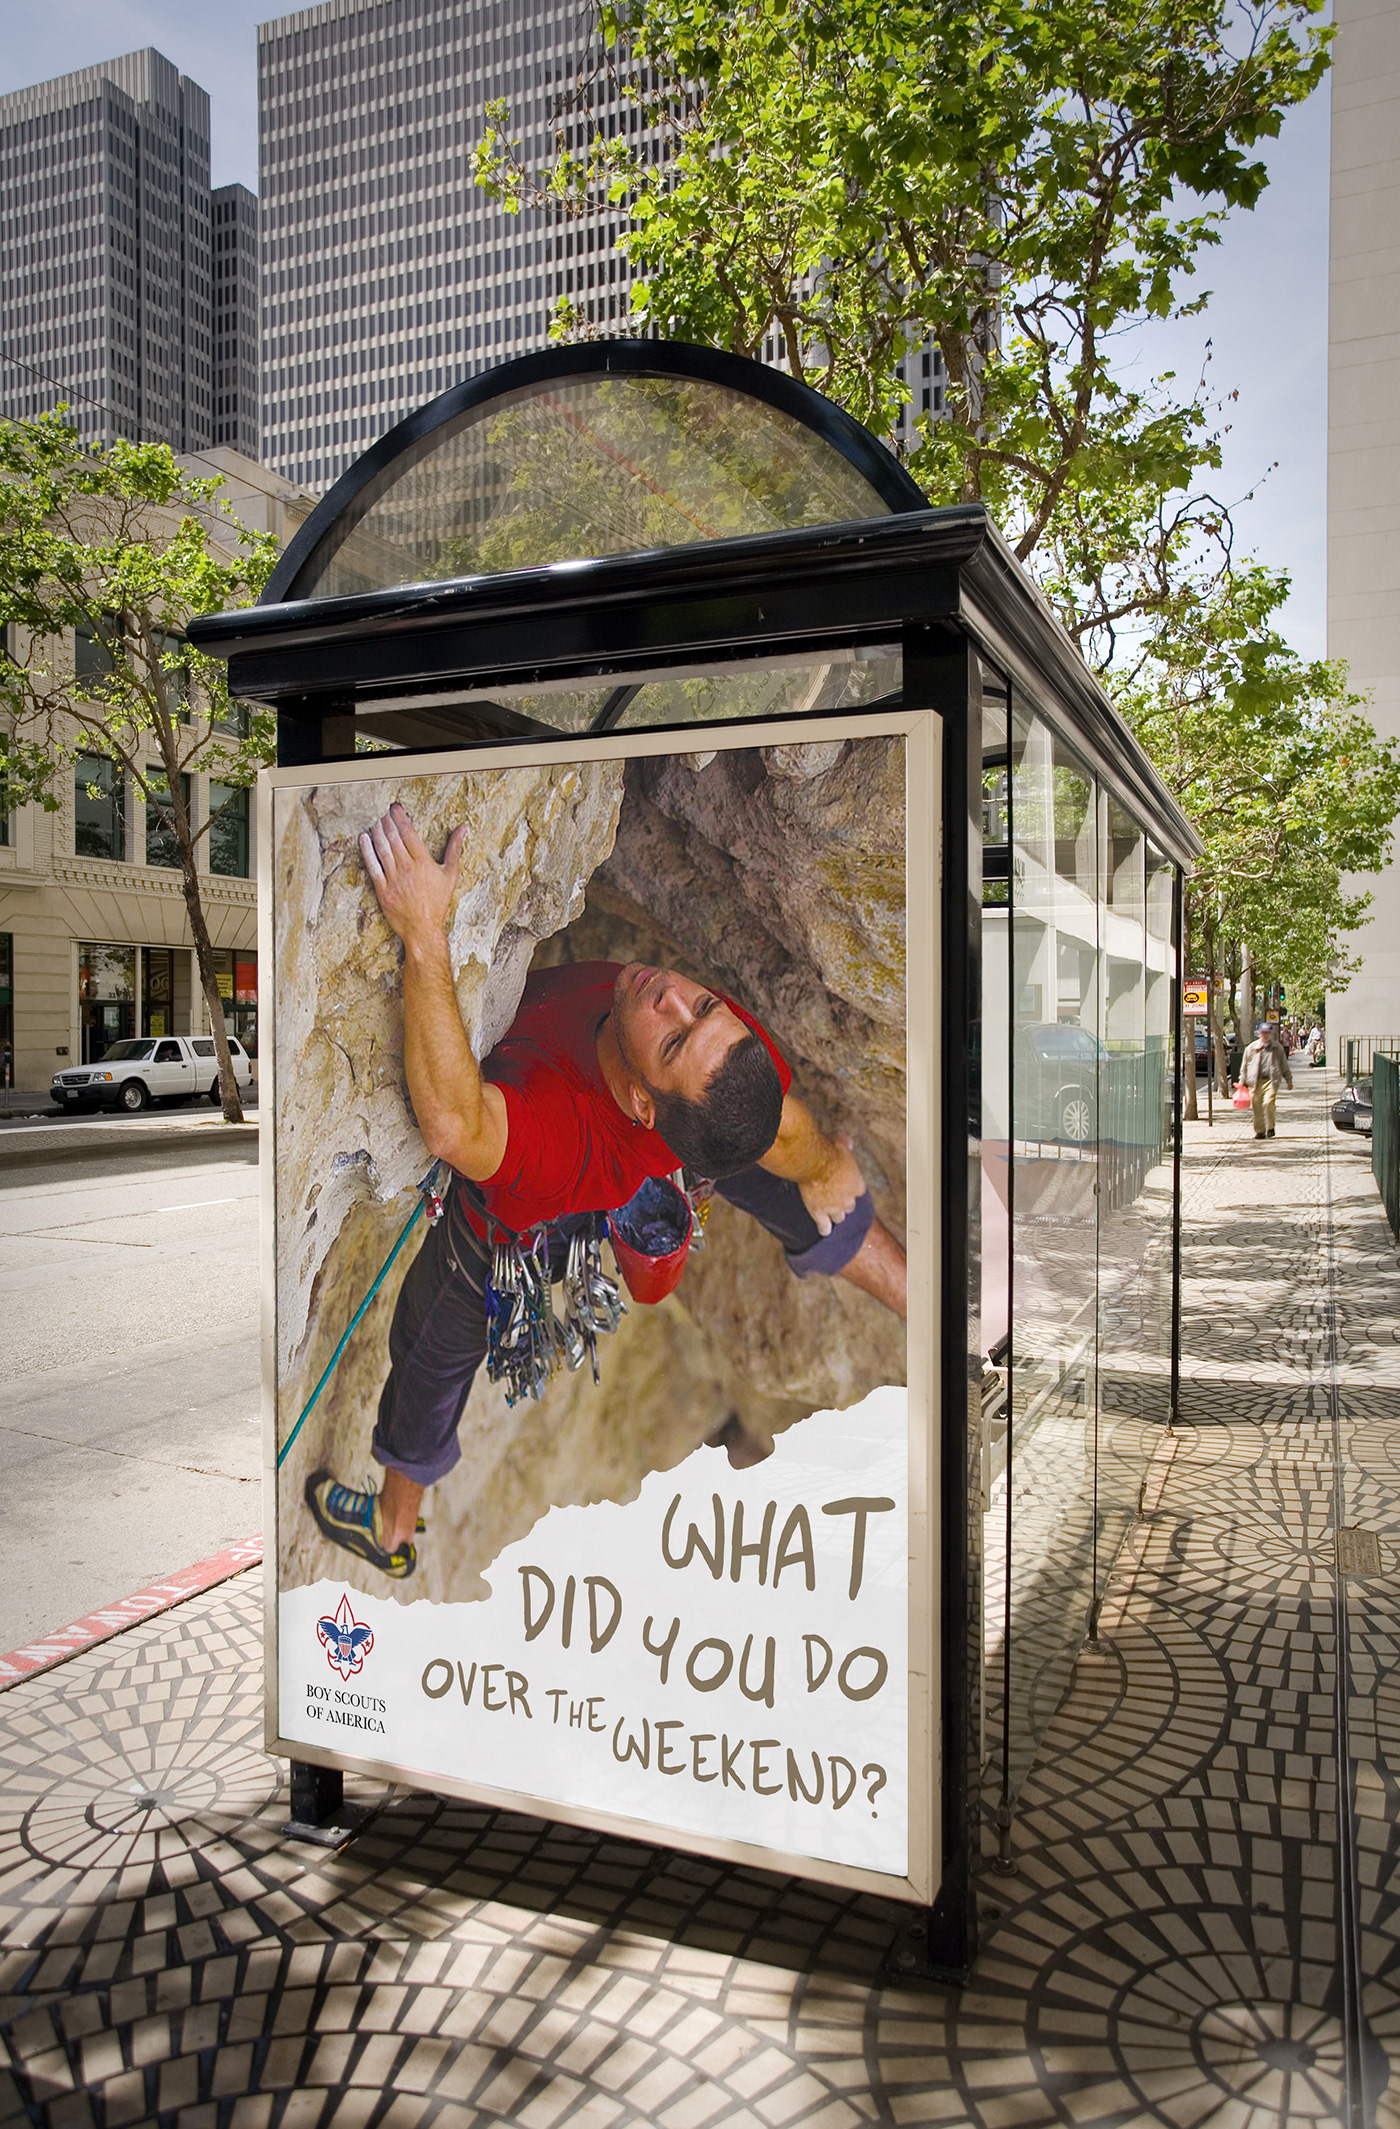 BOY SCOUTS advertisement campaign Outdoor activities